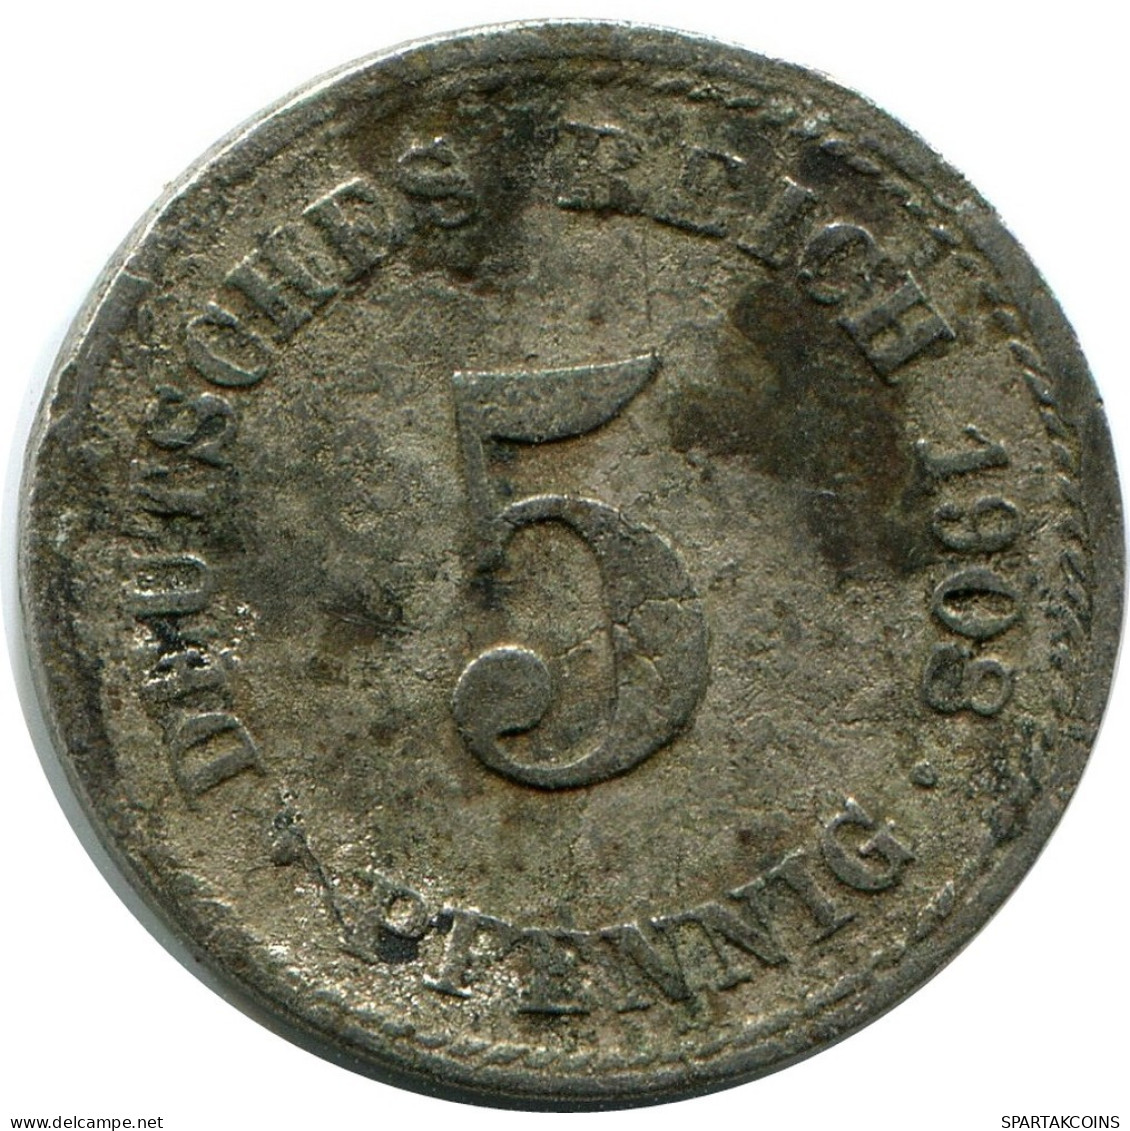 5 PFENNIG 1908 F DEUTSCHLAND Münze GERMANY #DB169.D.A - 5 Pfennig